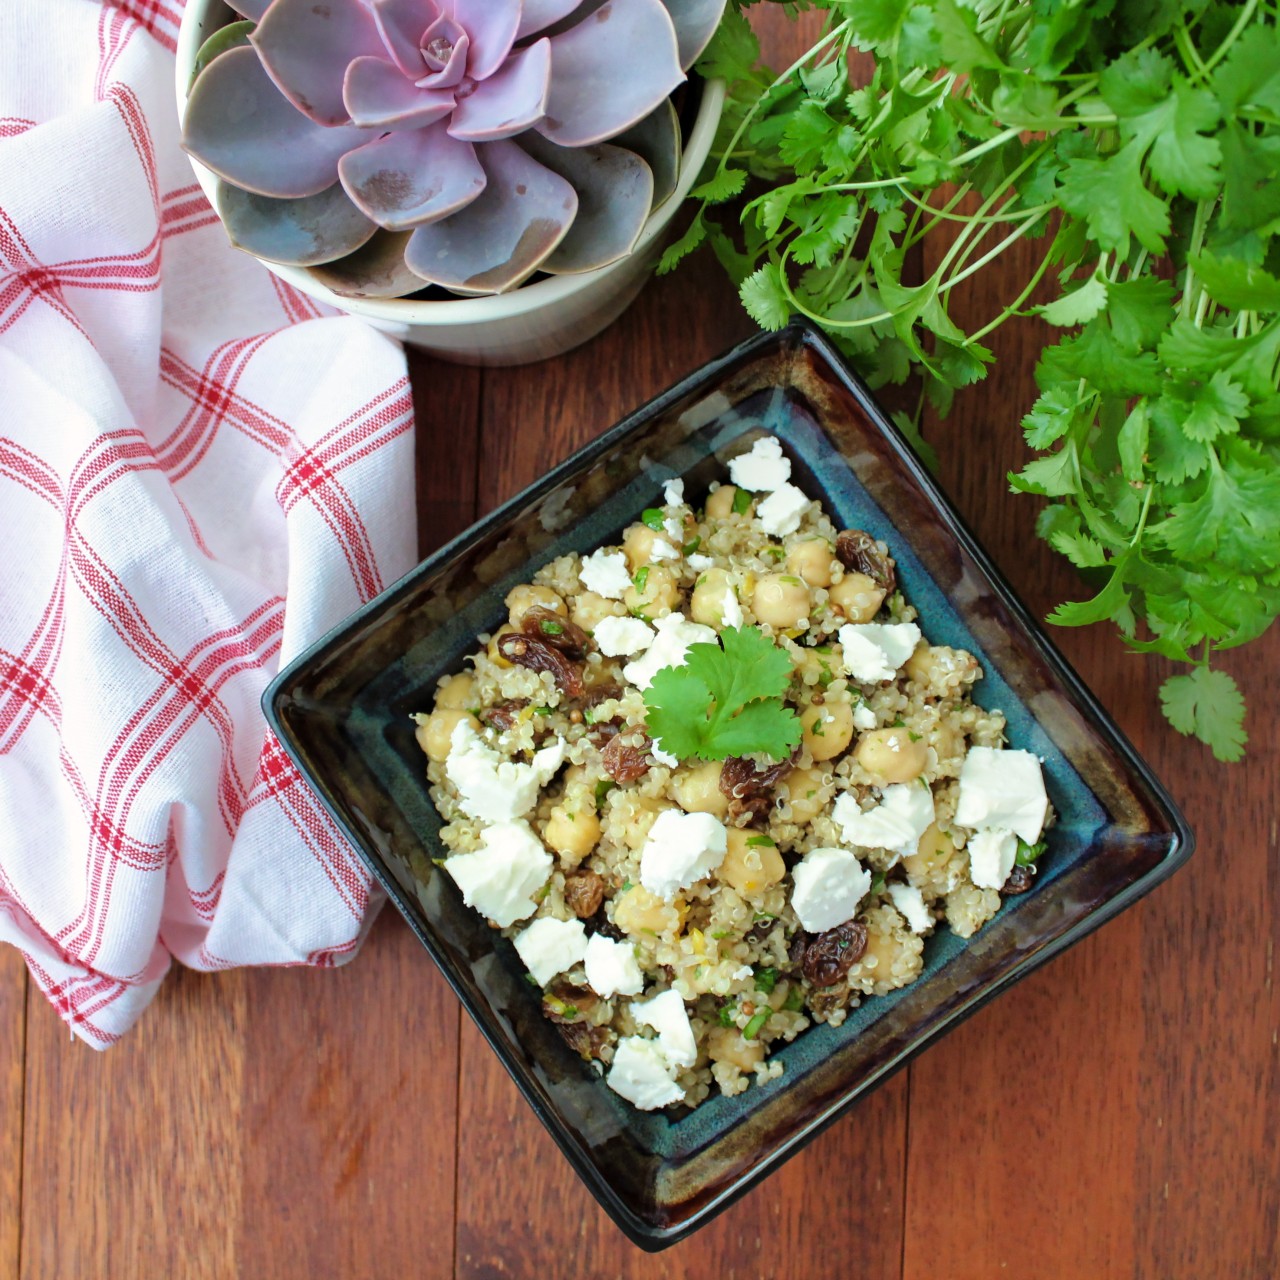 Quinoa Salad Mediterranean
Delicious salad with quinoa, chickpeas, raisins and feta cheese.
By Tastes of Health